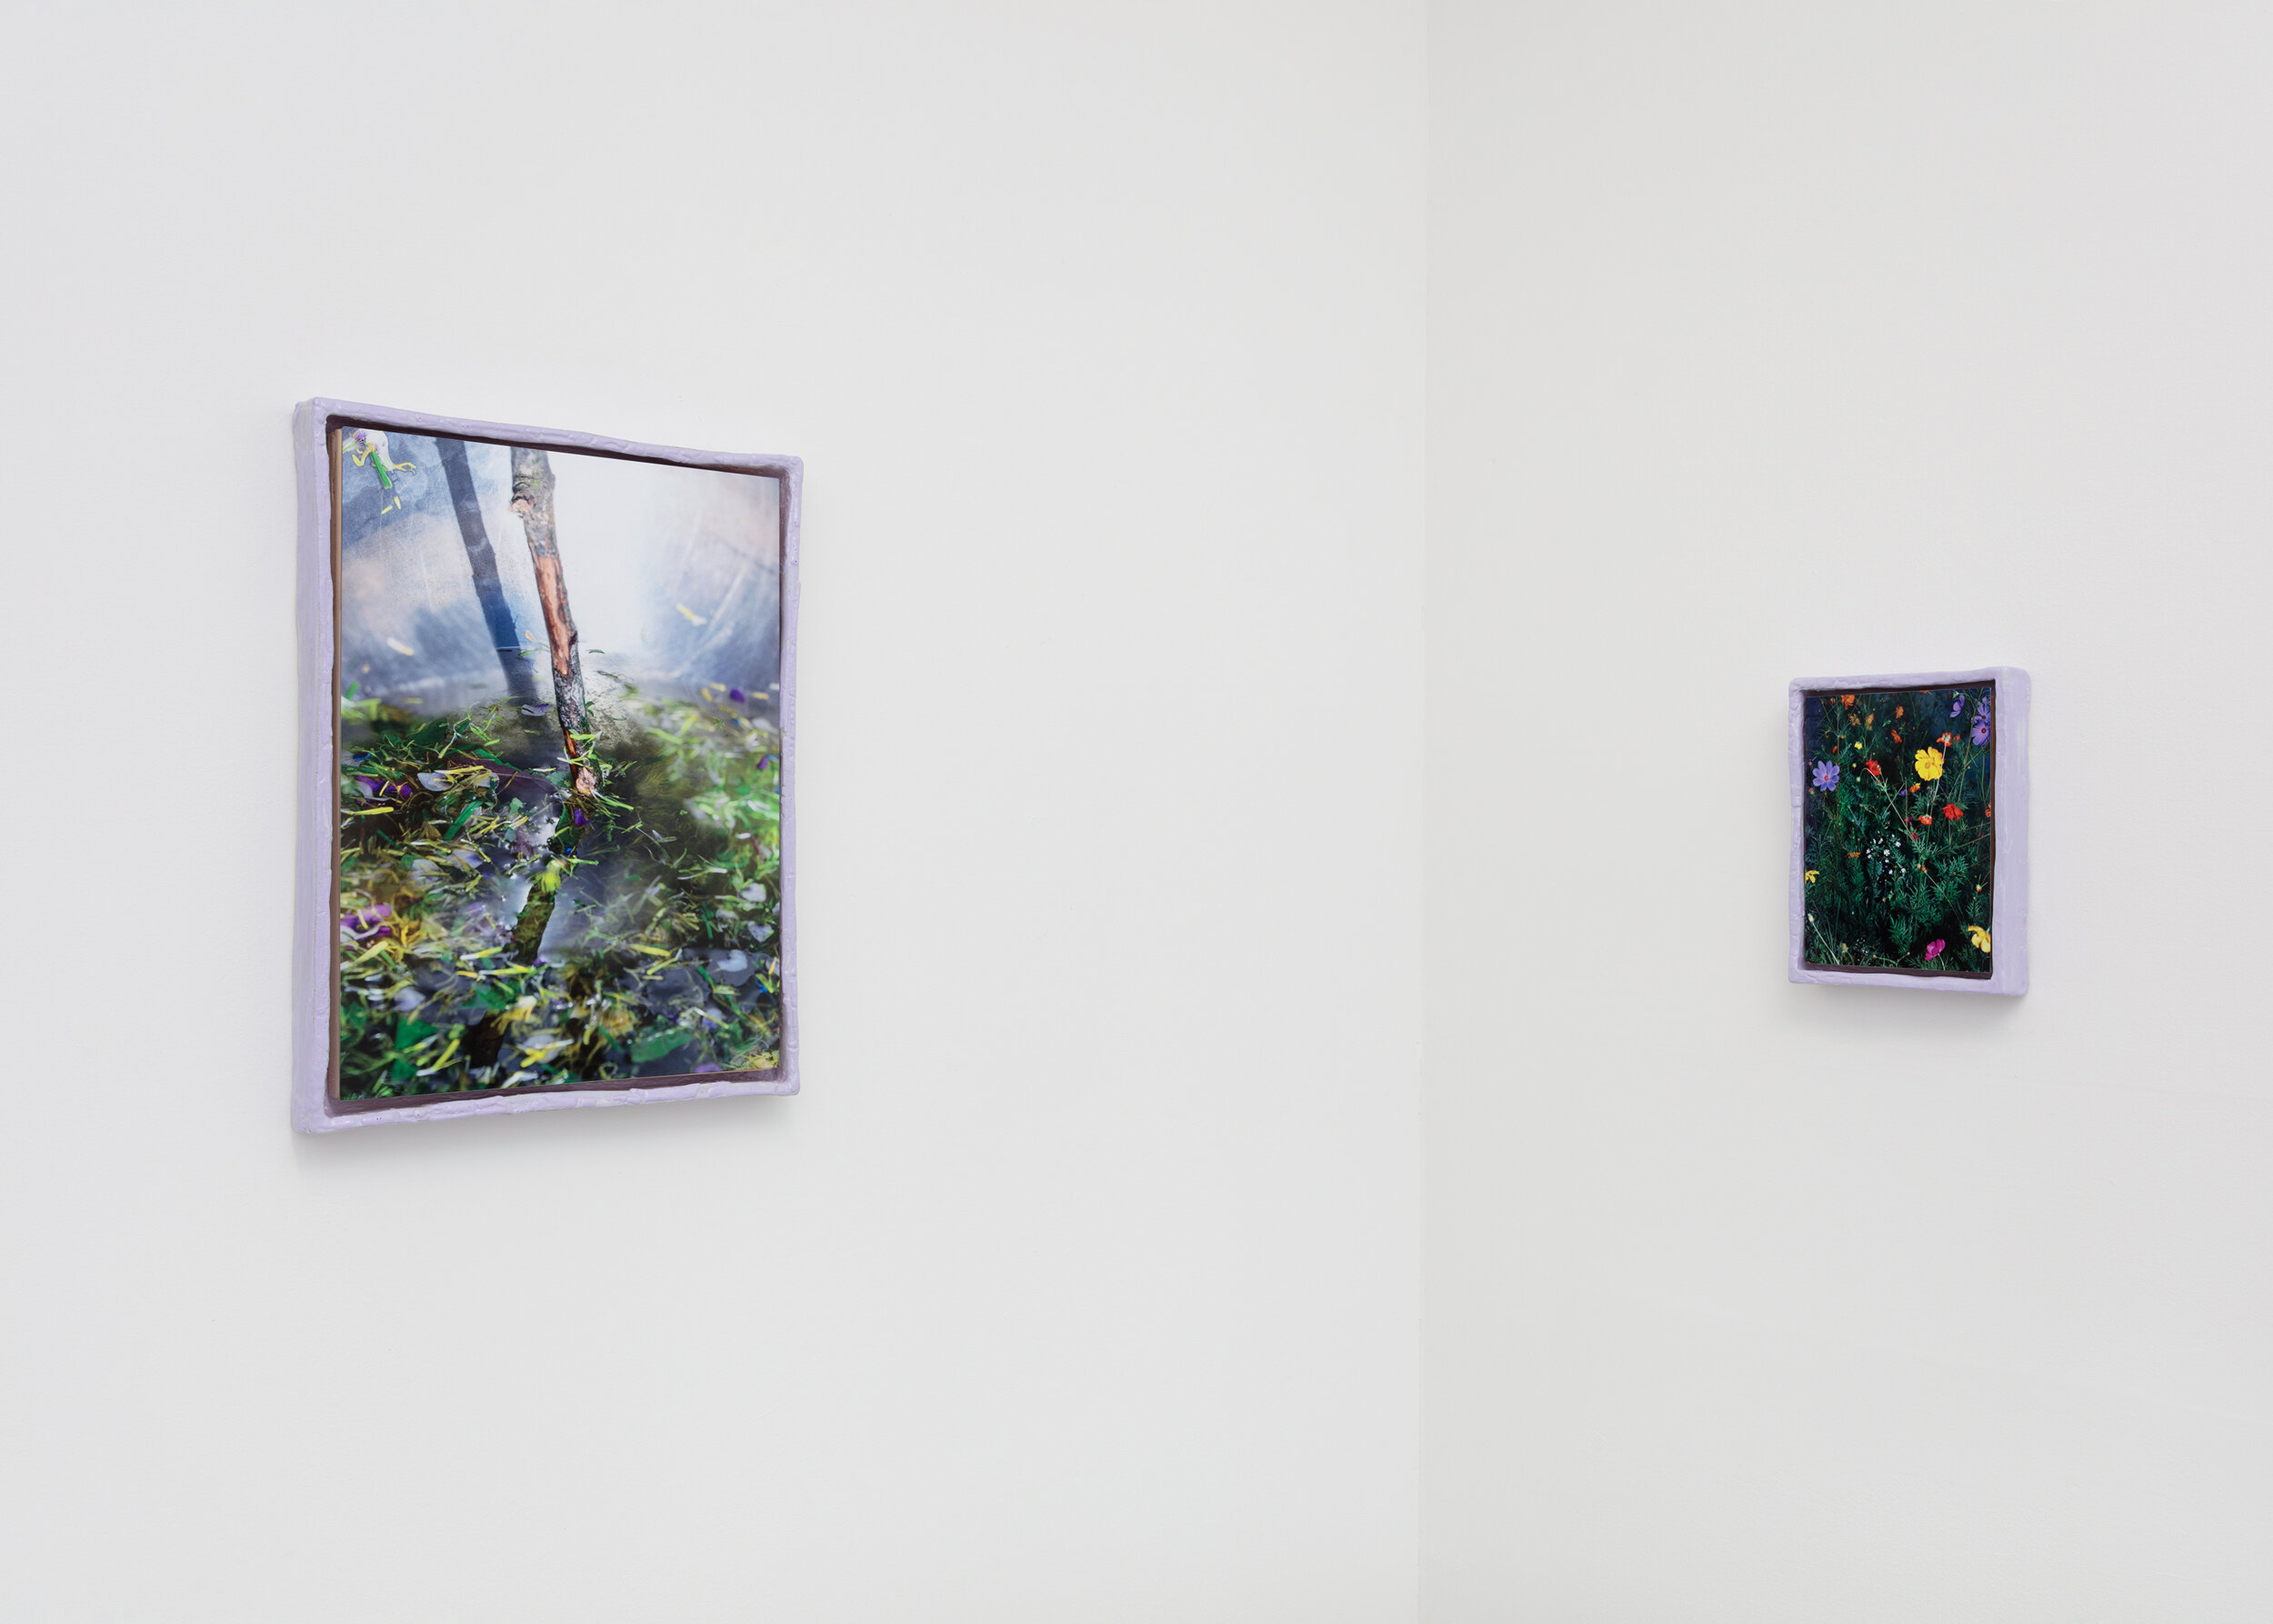 Michelle Loh's exhibition showing two Scott Alario photos in ceramic frames